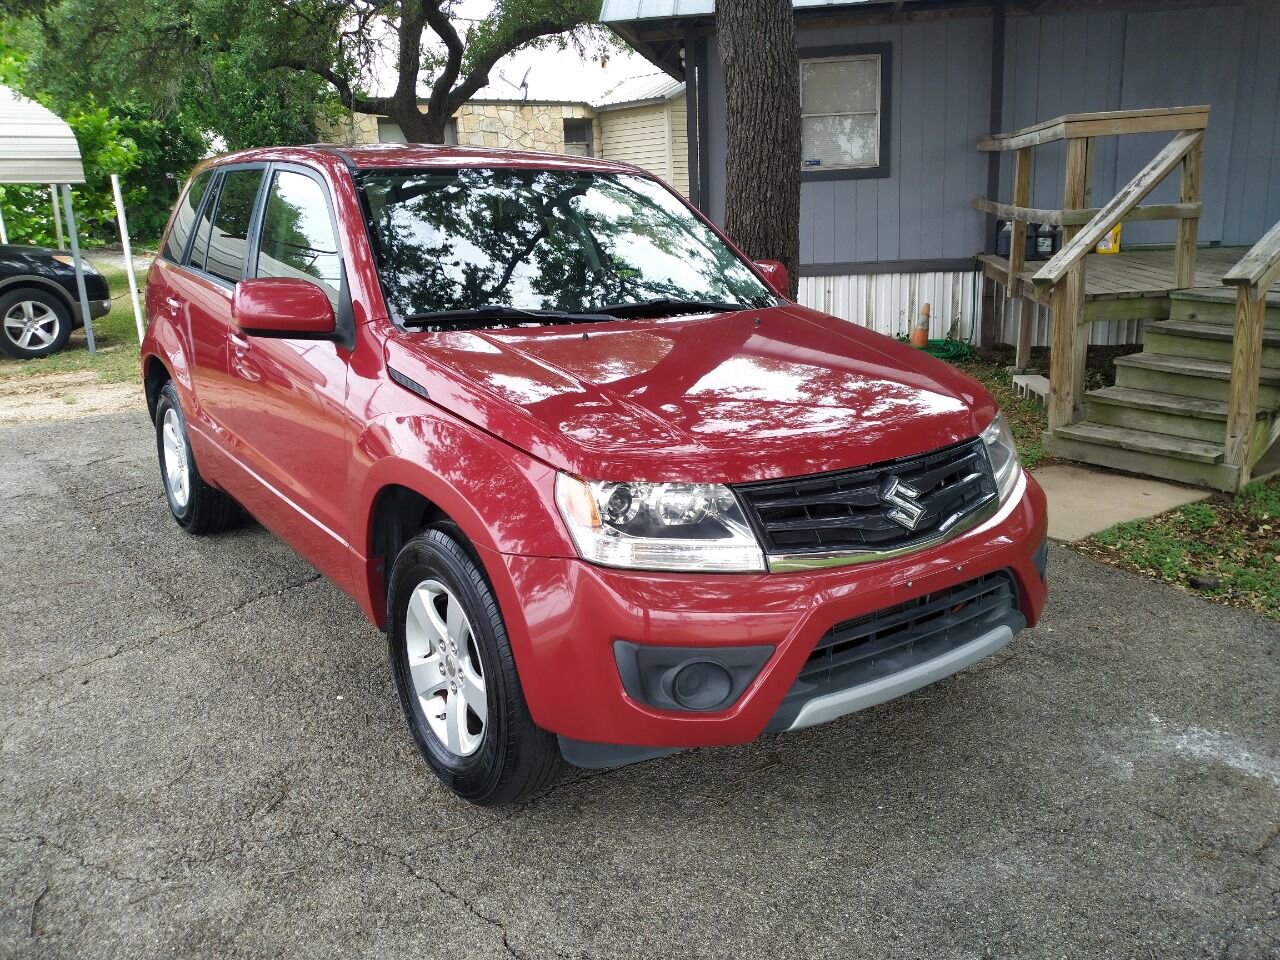 2013 Suzuki Grand Vitara for Sale (Test Drive at Home) - Kelley Blue Book